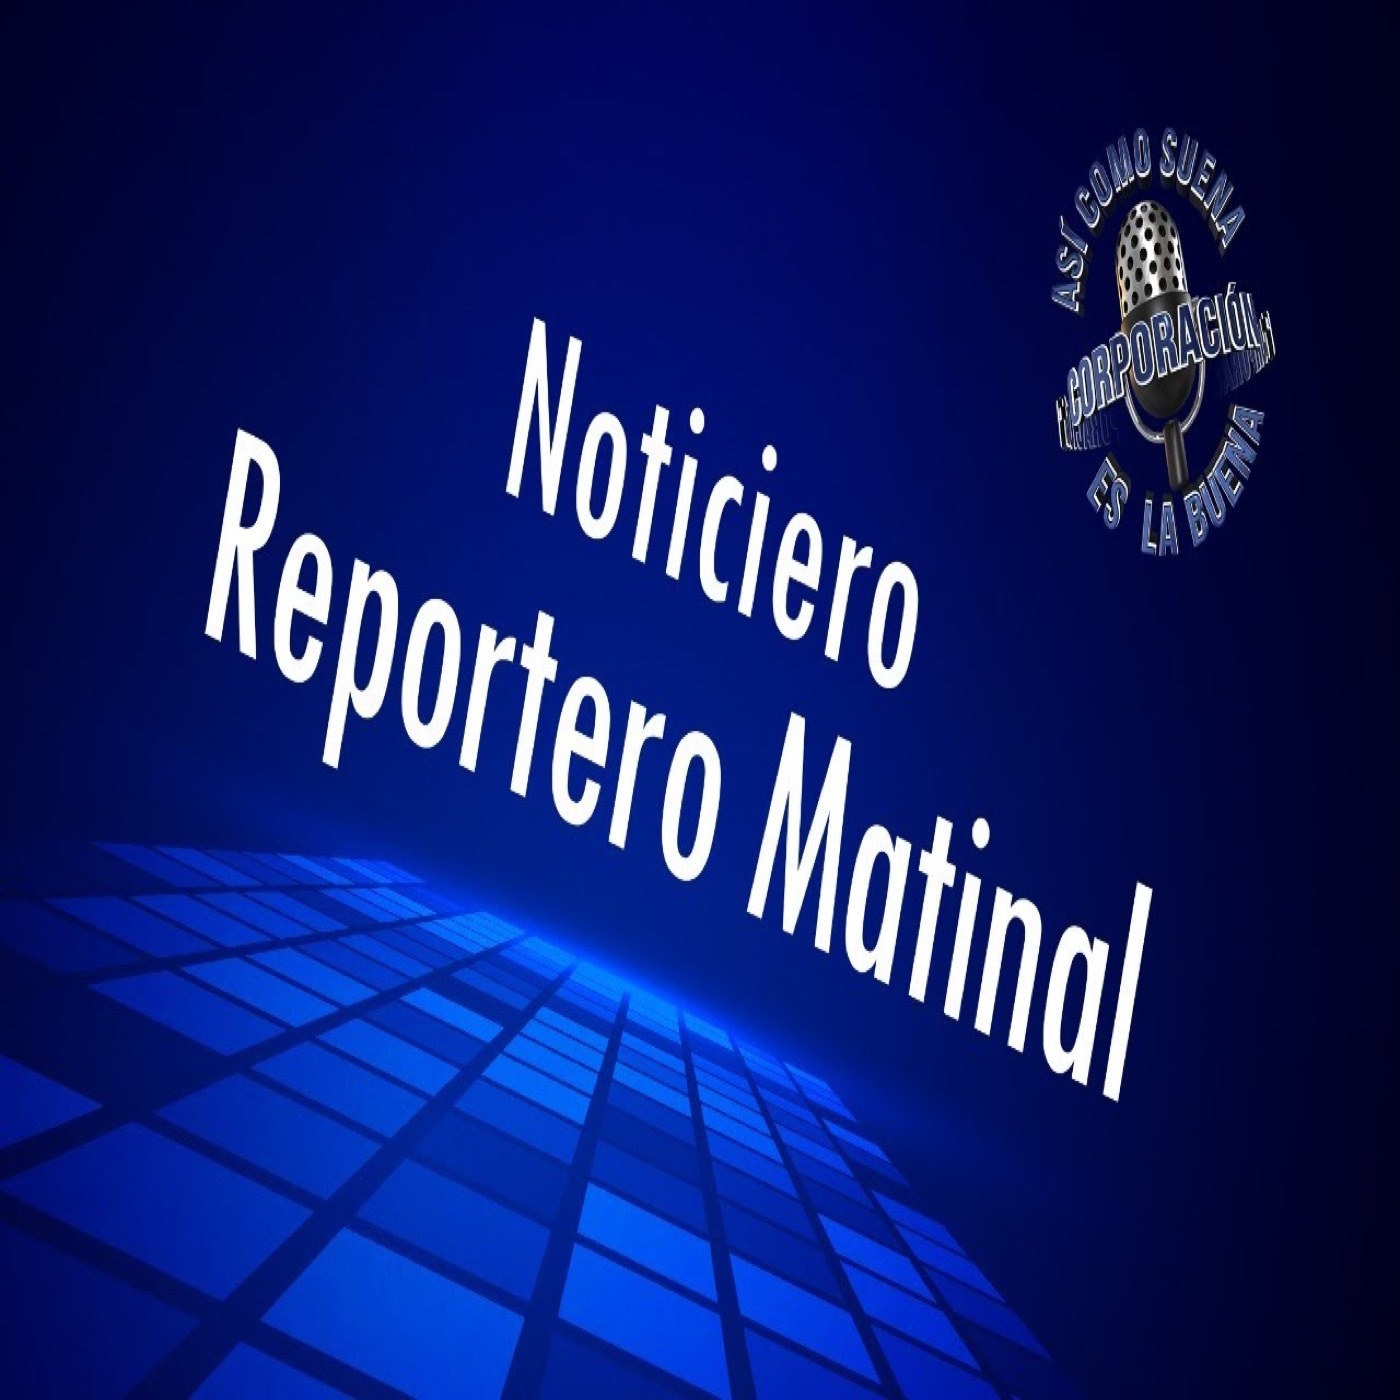 Noticiero Reportero Matinal - Tuesday, November 29, 2022